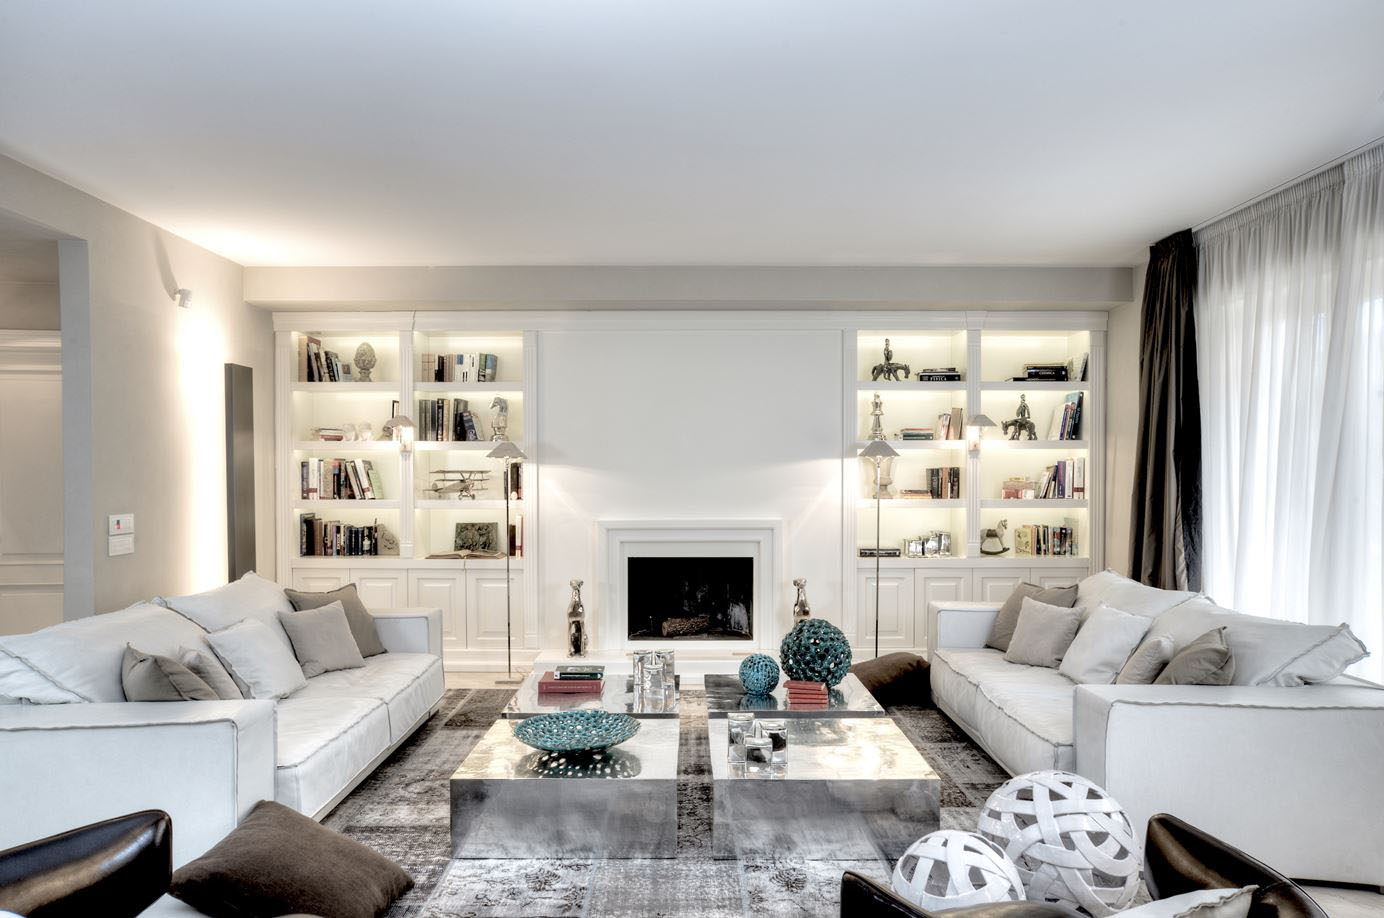 Luxury Home Interior With Timeless Contemporary Elegance | iDesignArch | Interior Design, Architecture & Interior Decorating eMagazine